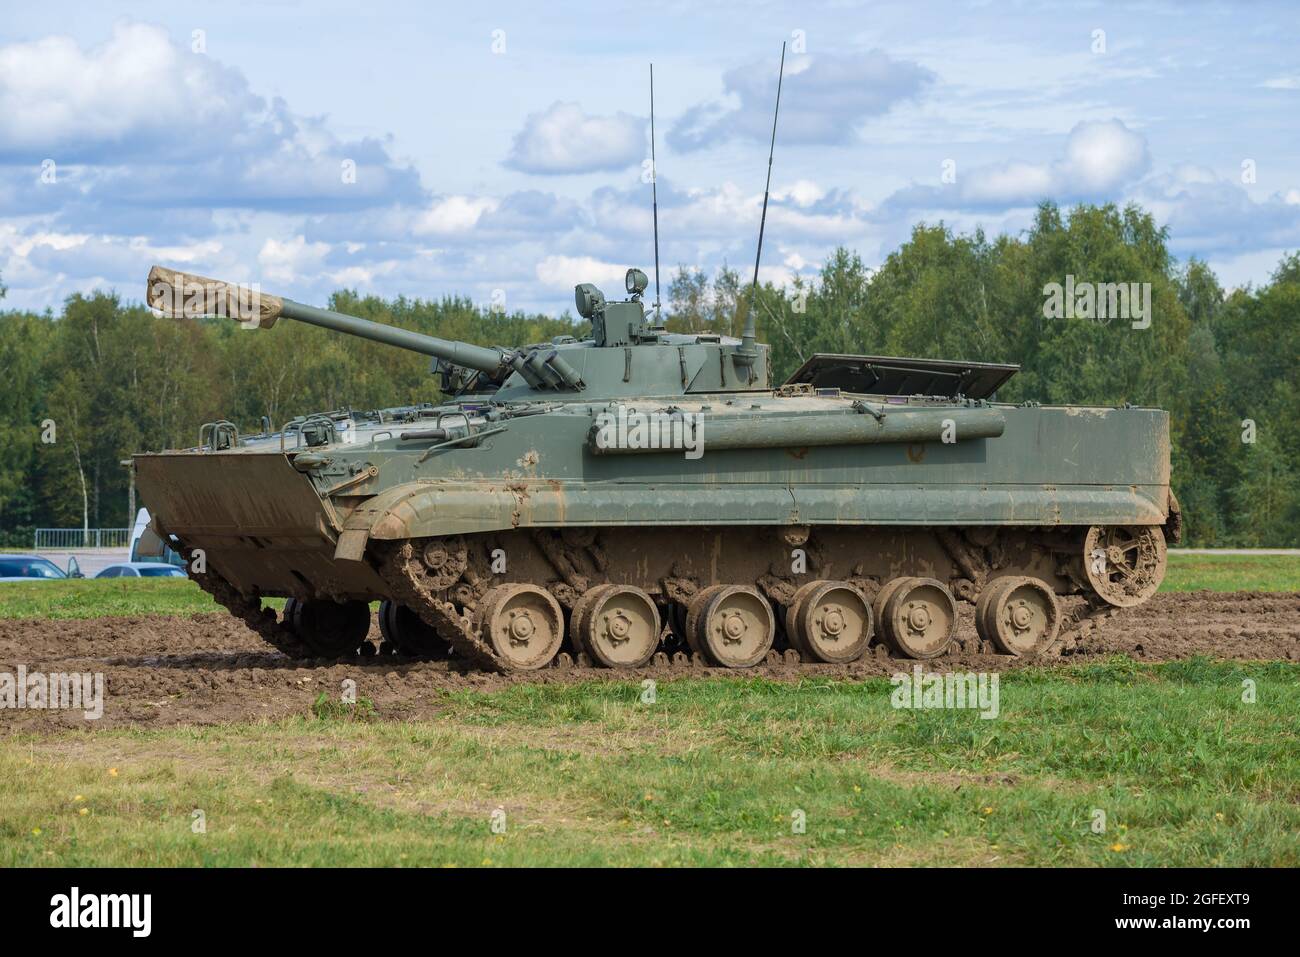 ALABINO, RUSSLAND - 27. AUGUST 2021: Russische Infanterie Kampffahrzeug BMP-3 Nahaufnahme. Alabino Trainingsgelände, 'Army-2020' International Military Techn Stockfoto